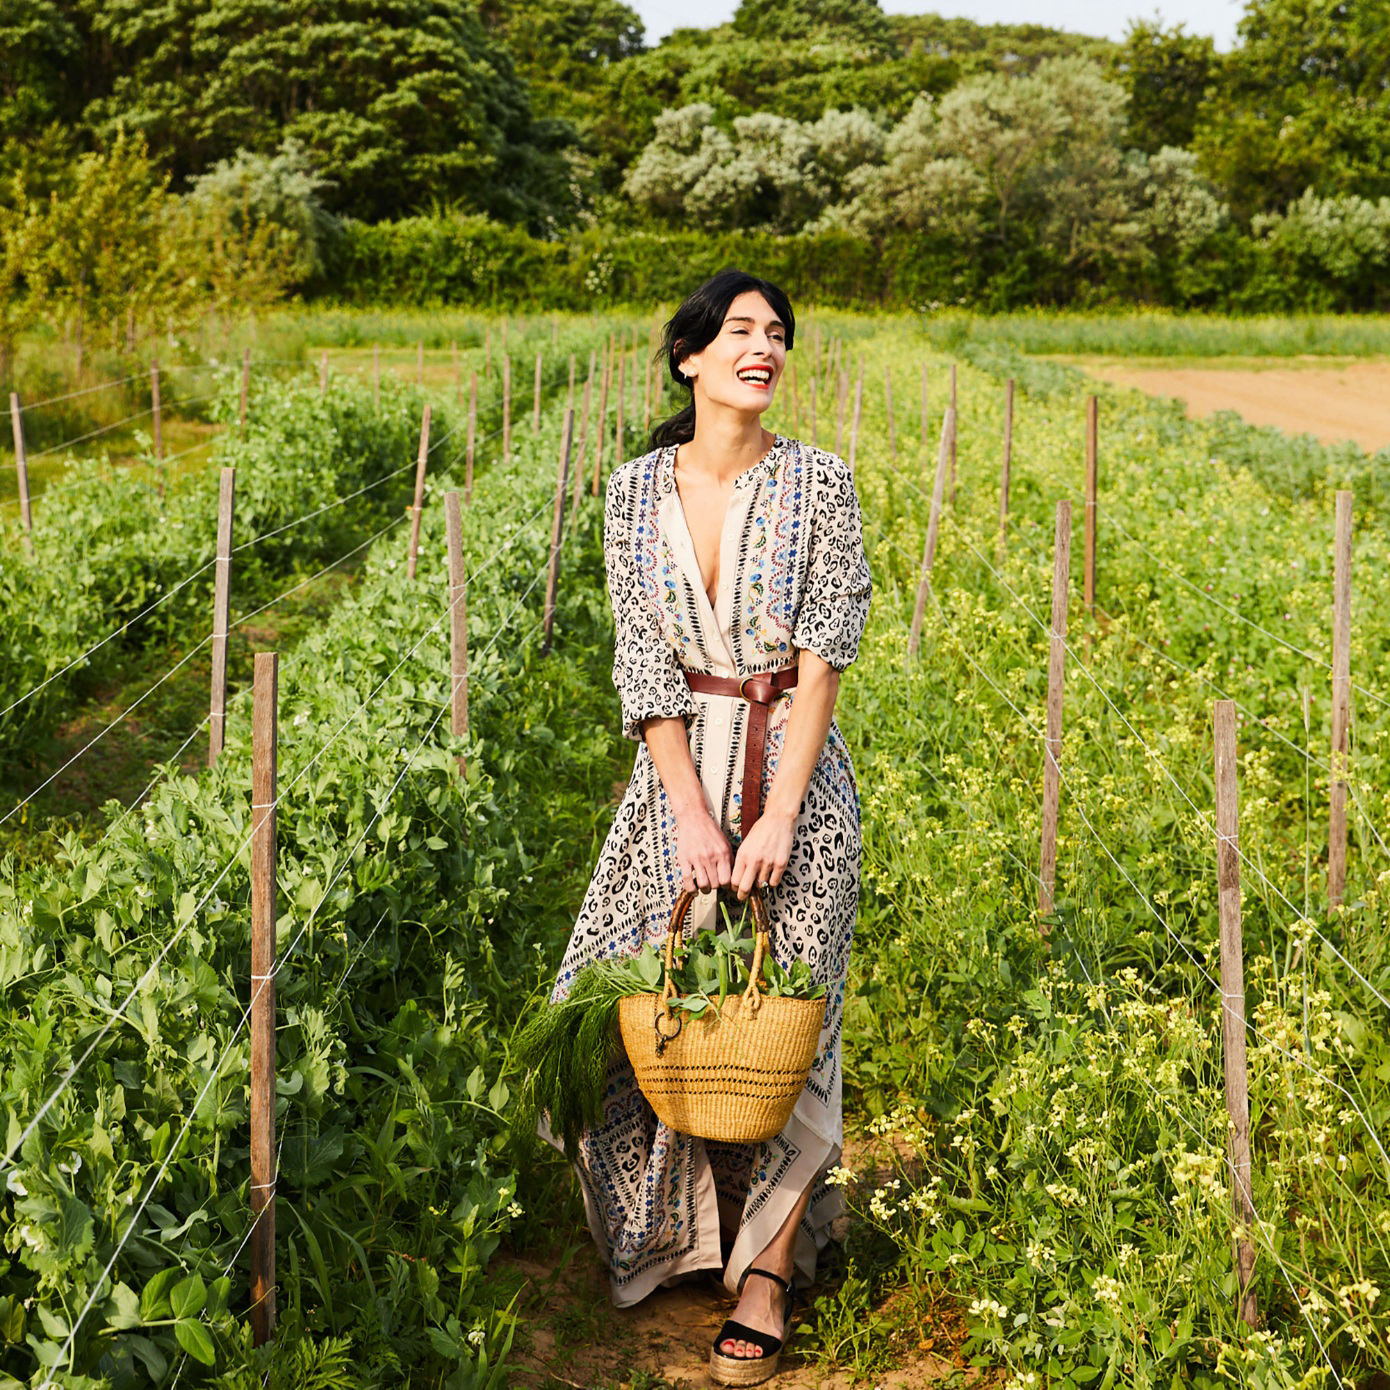 Woman with basket in fields